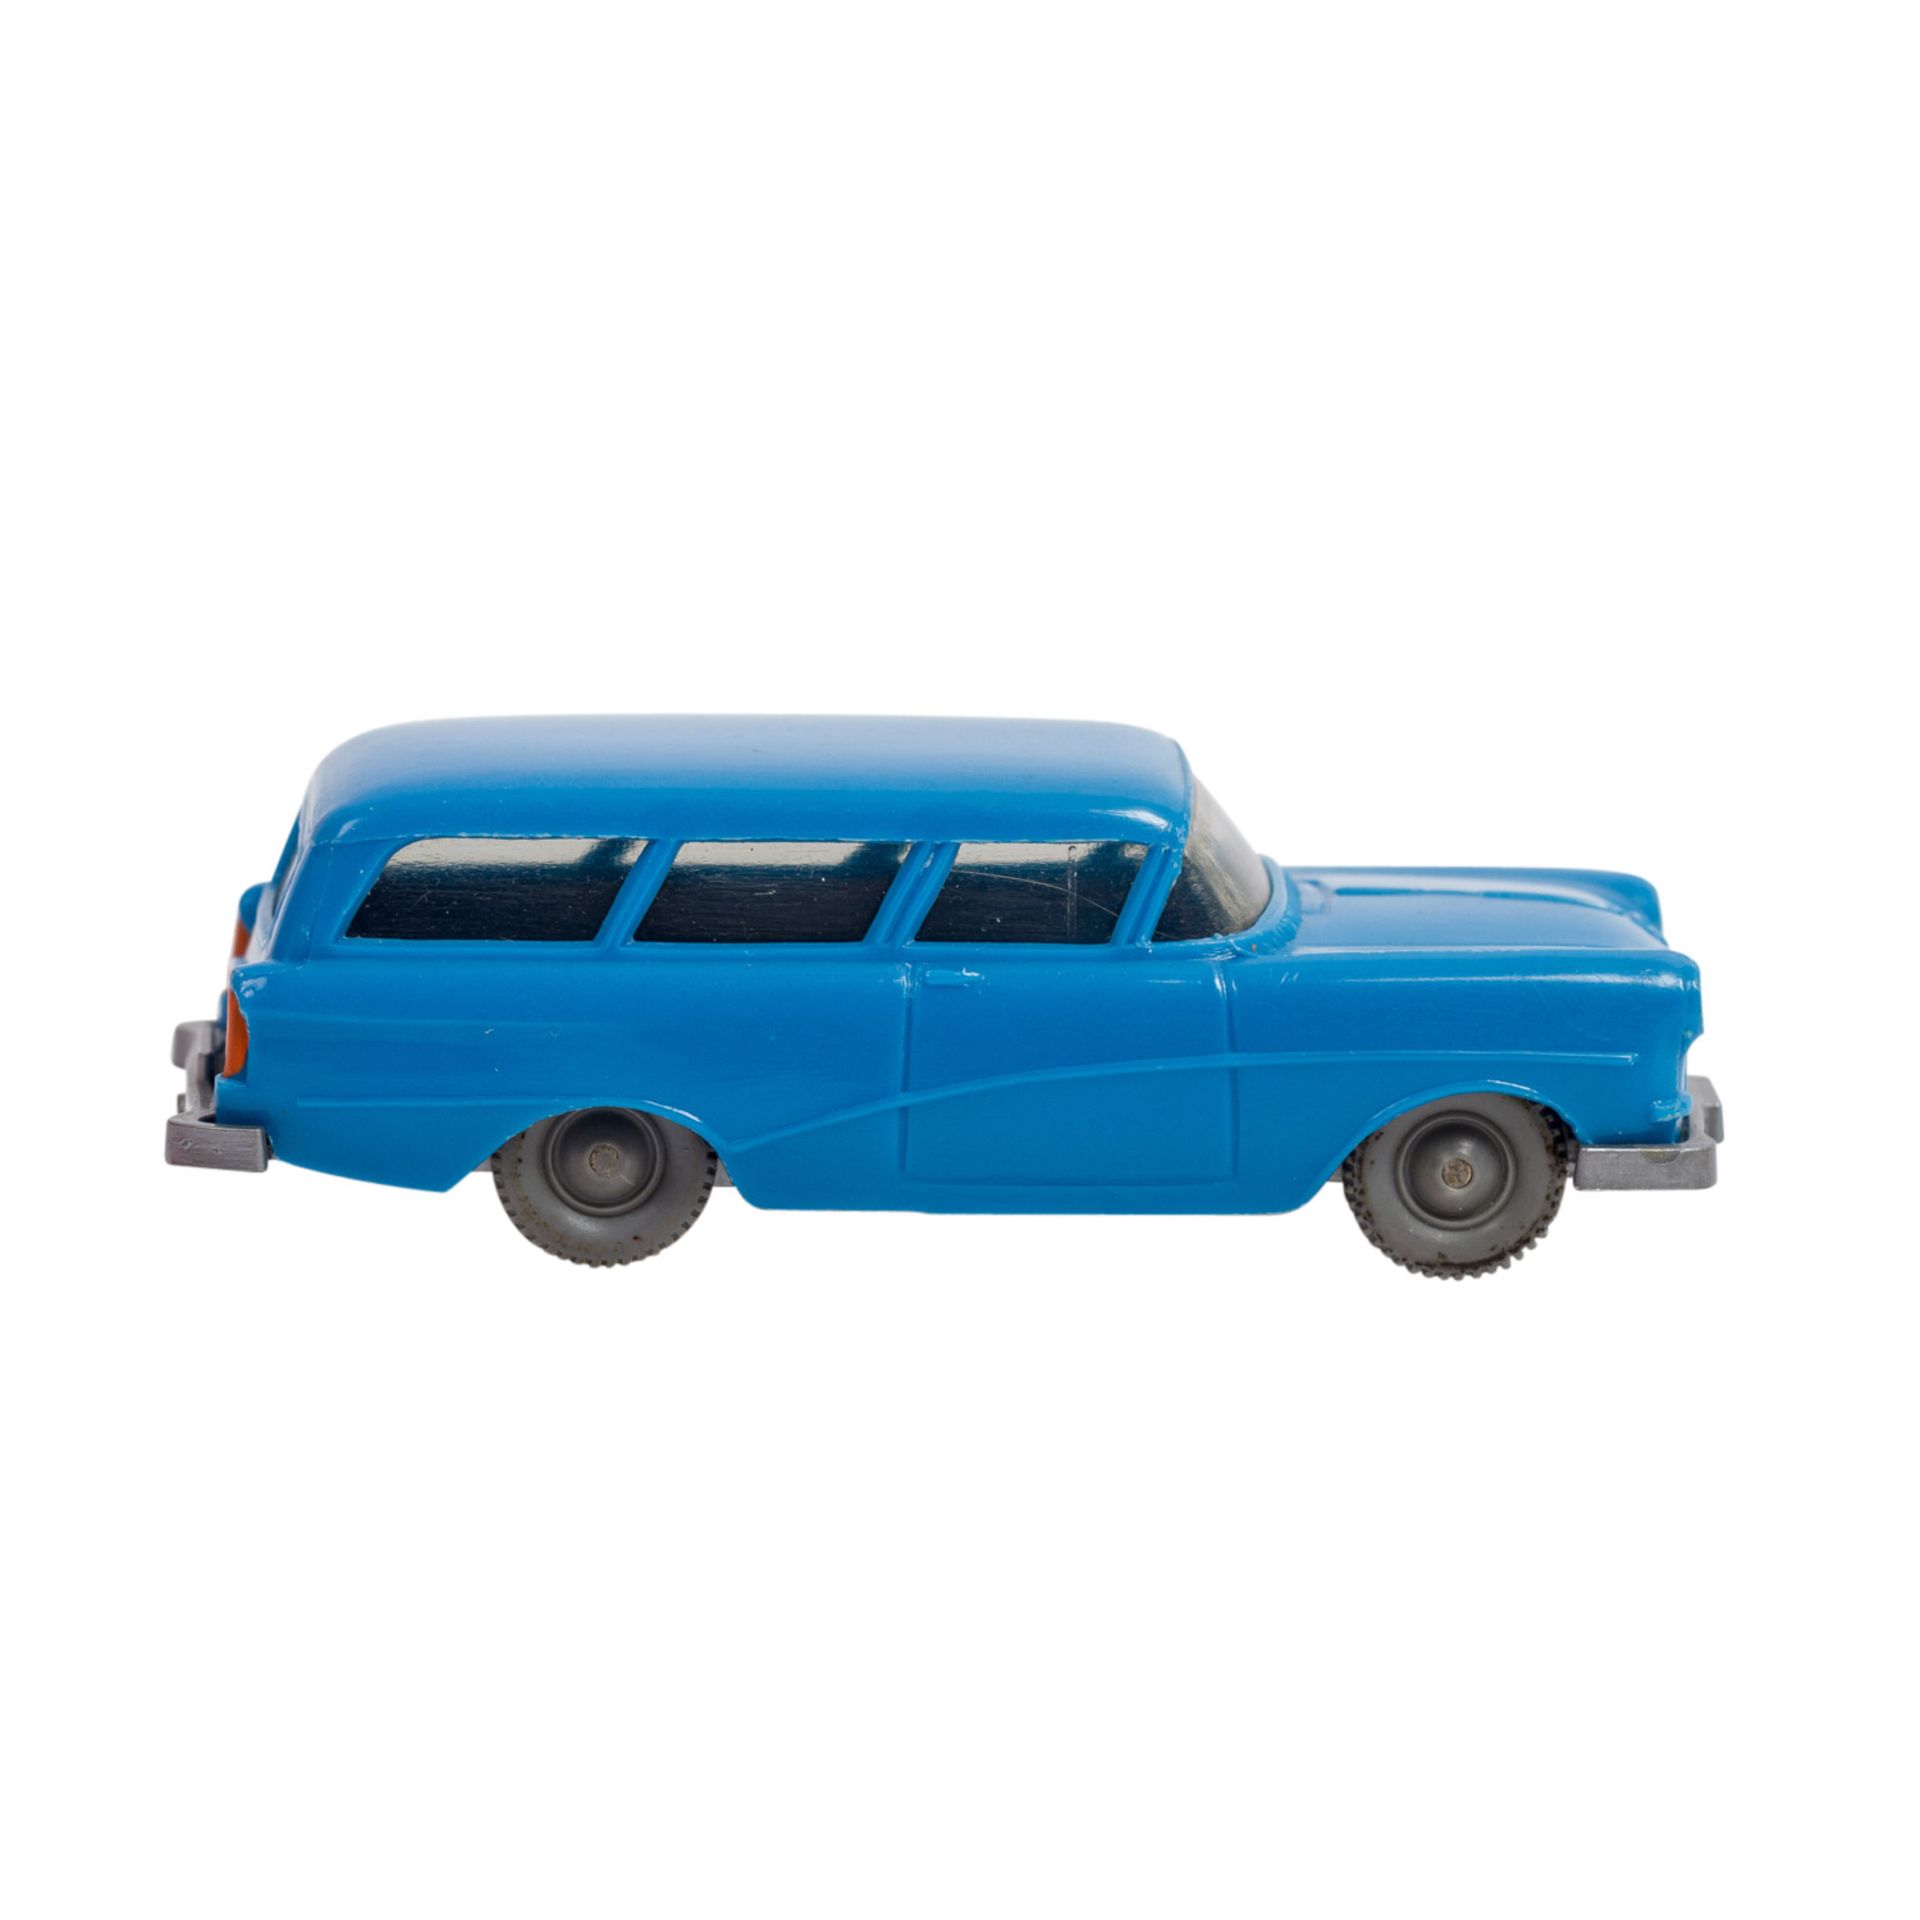 WIKING Opel Caravan '57, 1959-1964,himmelblaue Karosserie, GK 70/2 A, Bodenprägung "W